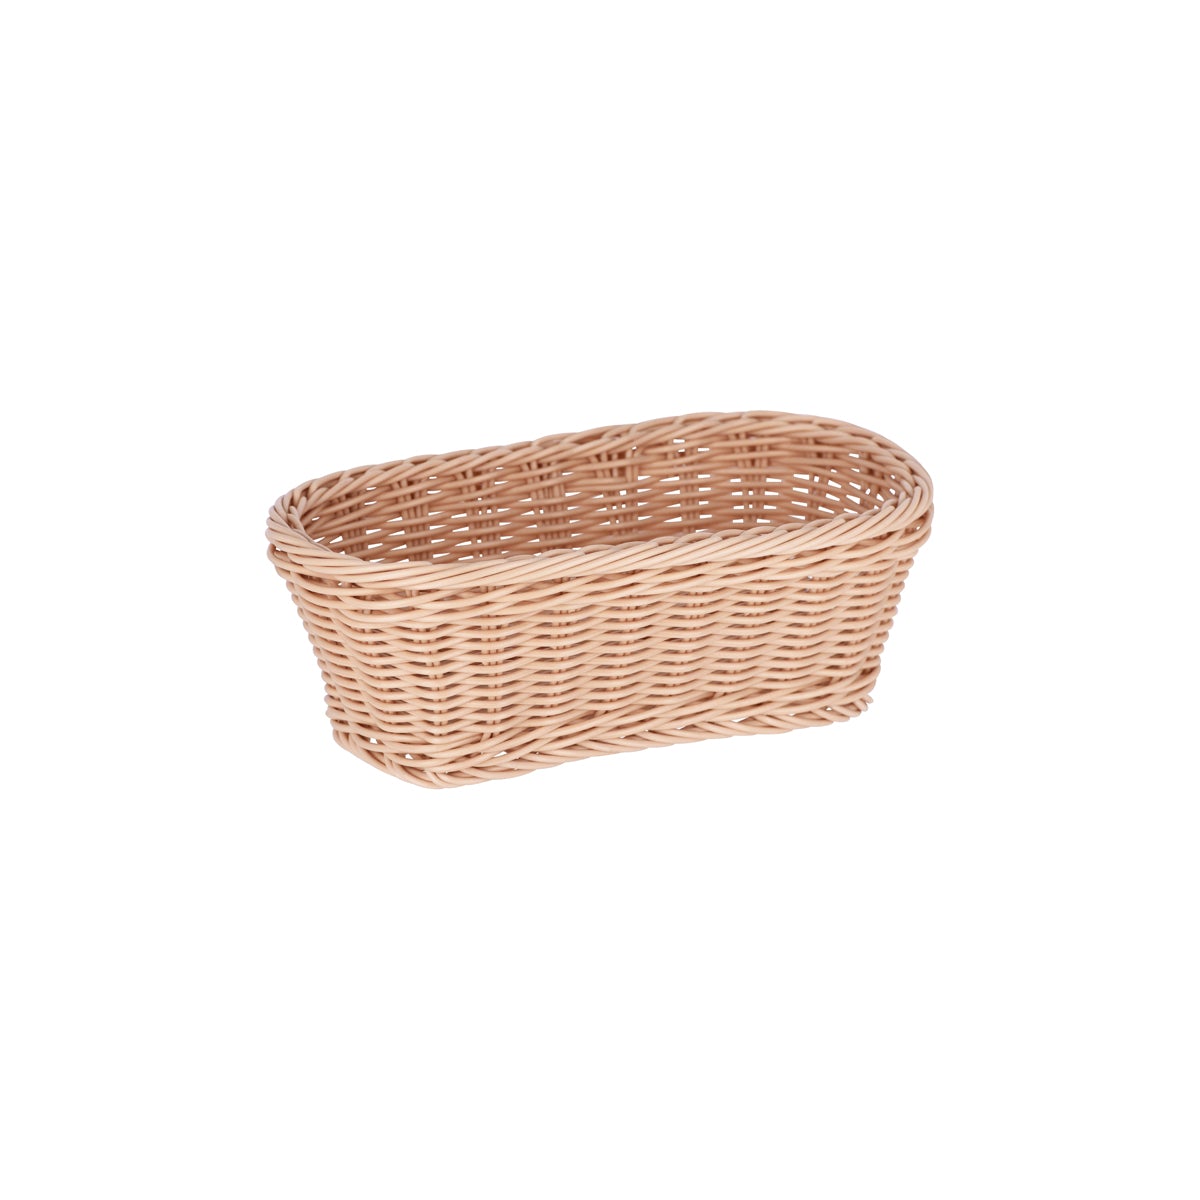 '04070 Chef Inox Bread Basket Rectangular Polypropylene 220x130x85mm Tomkin Australia Hospitality Supplies